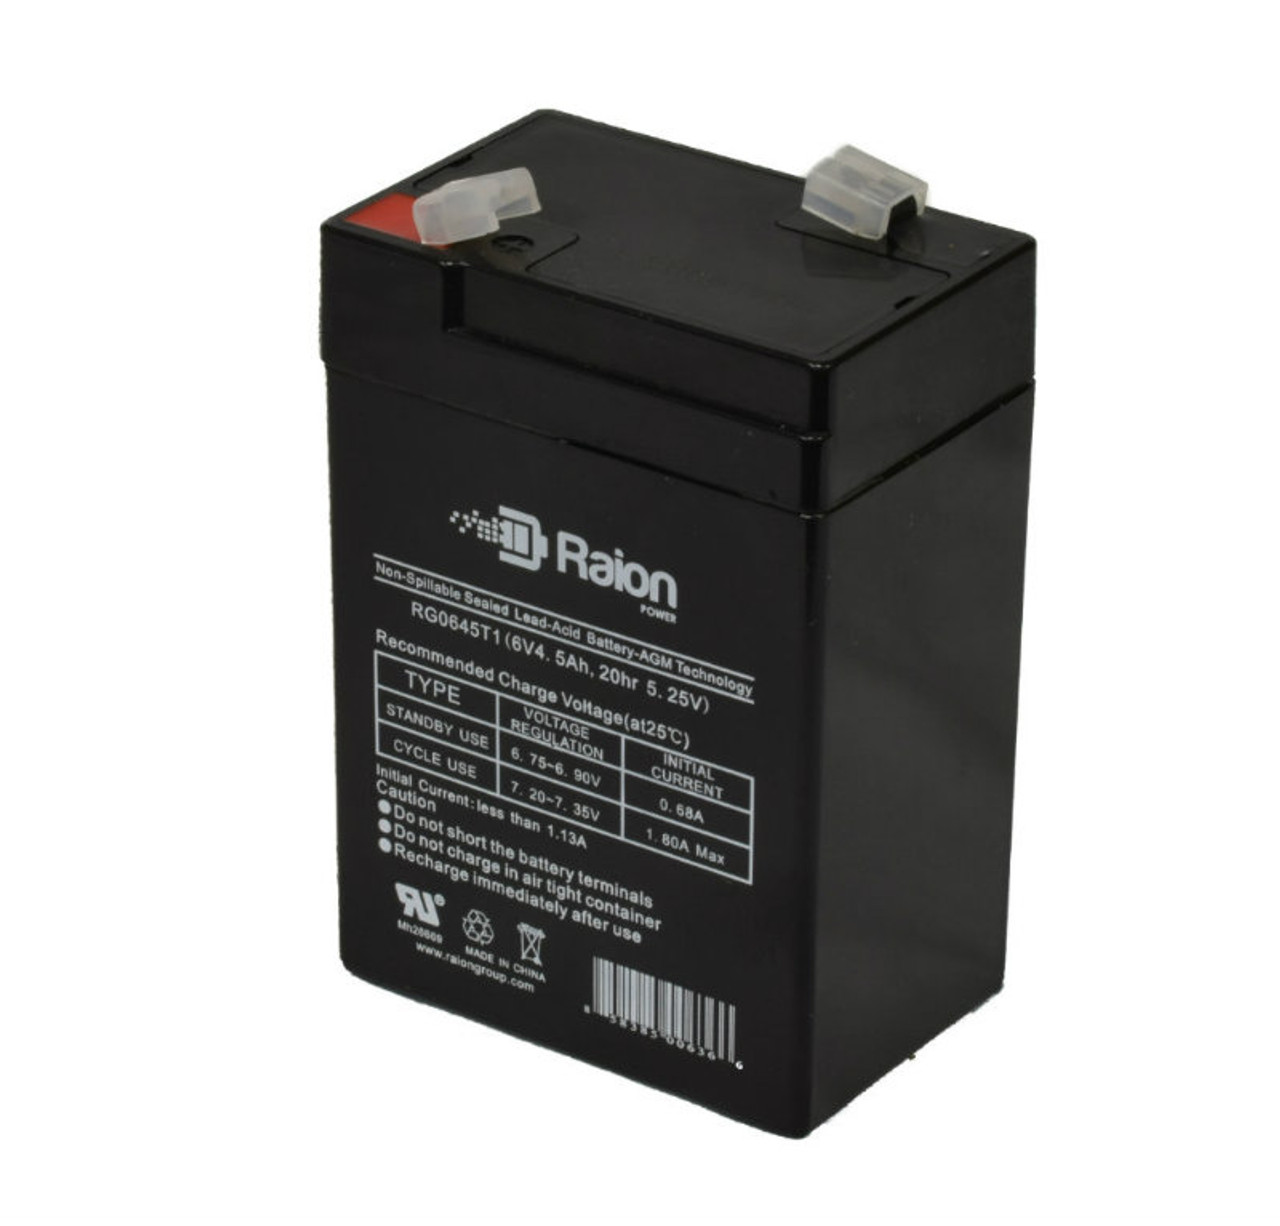 Raion Power RG0645T1 6V 4.5Ah Replacement Battery Cartridge for Sealake FM650E